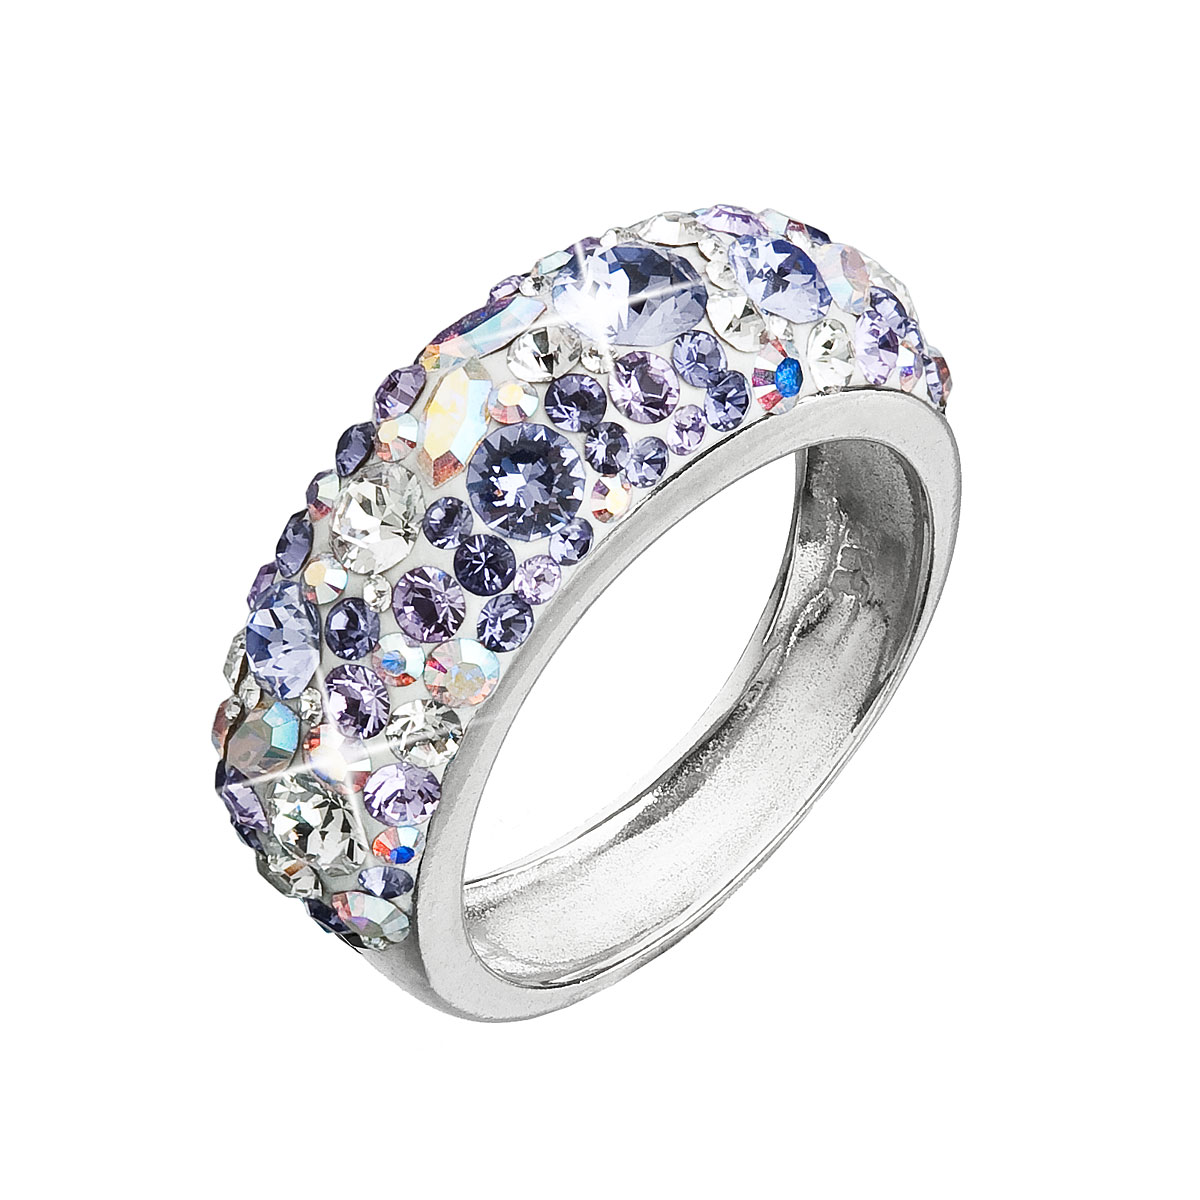 Evolution Group Stříbrný prsten s krystaly Swarovski fialový 35031.3 violet